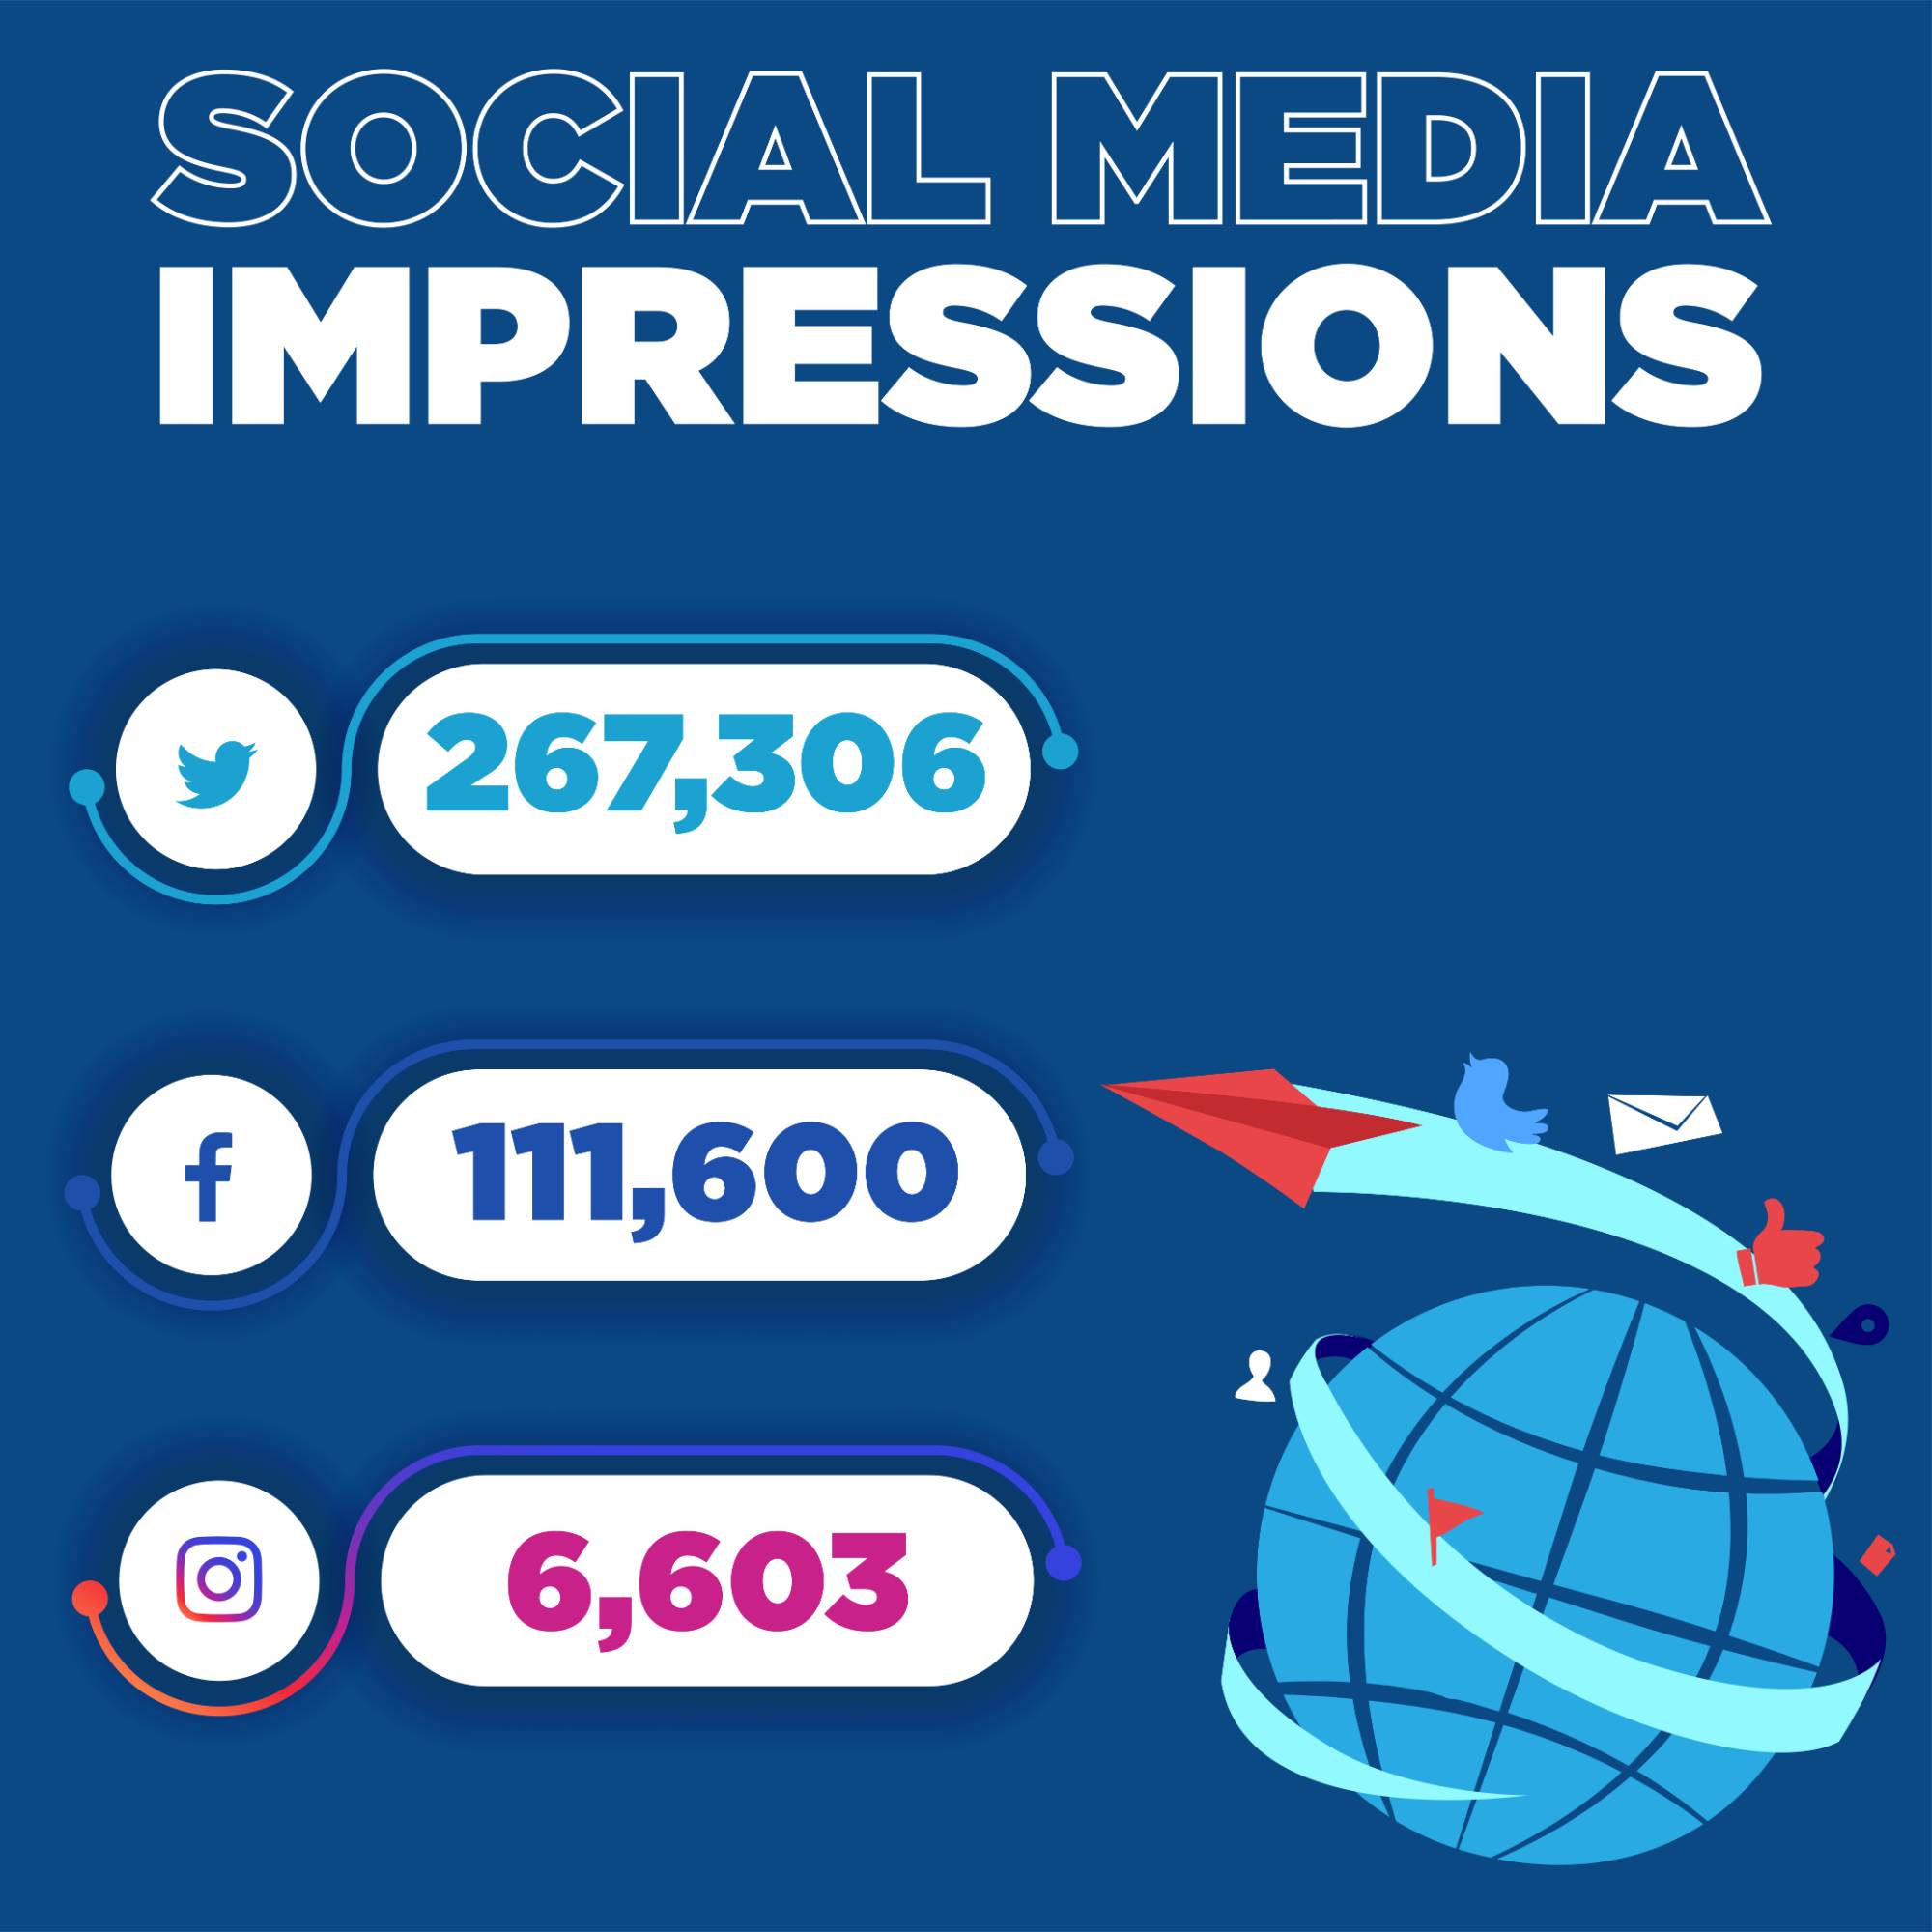 Social media impressions: Twitter (267,306 impressions), Facebook (111,600 impressions), Instagram (6,603 impressions).